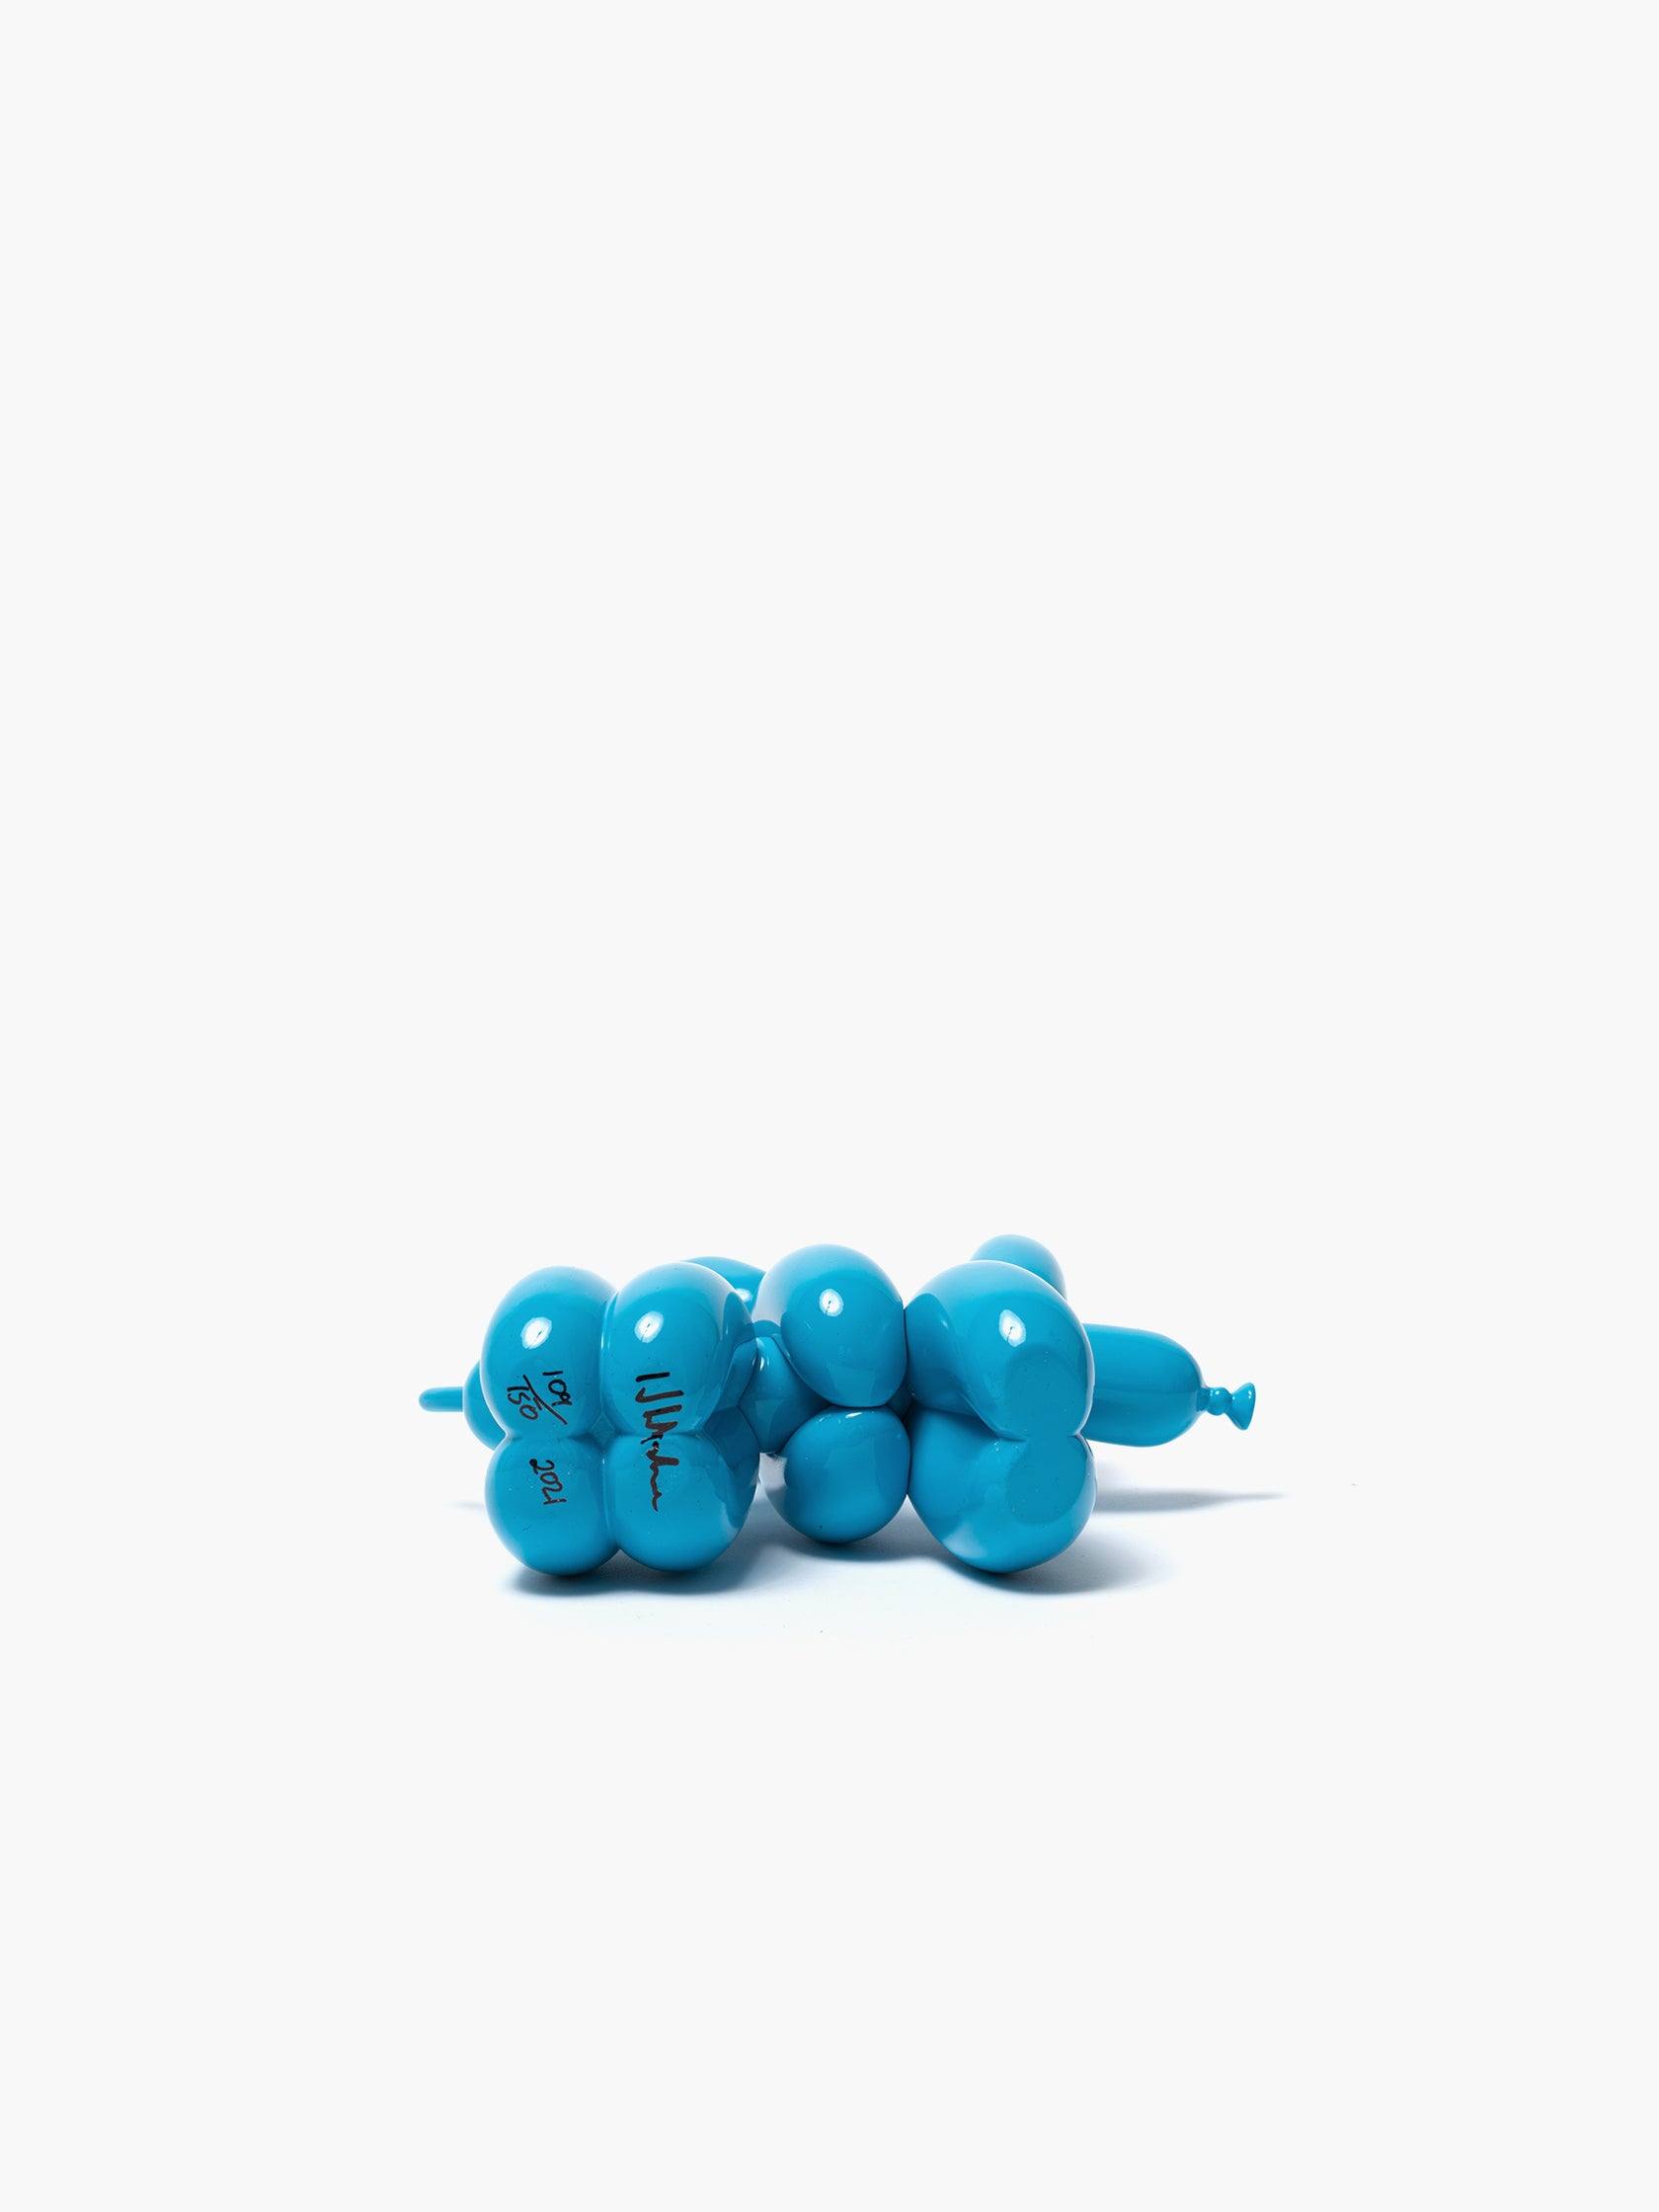 Humpek Balloon Dog mini Blue by Whatshisname - Mankovsky Gallery